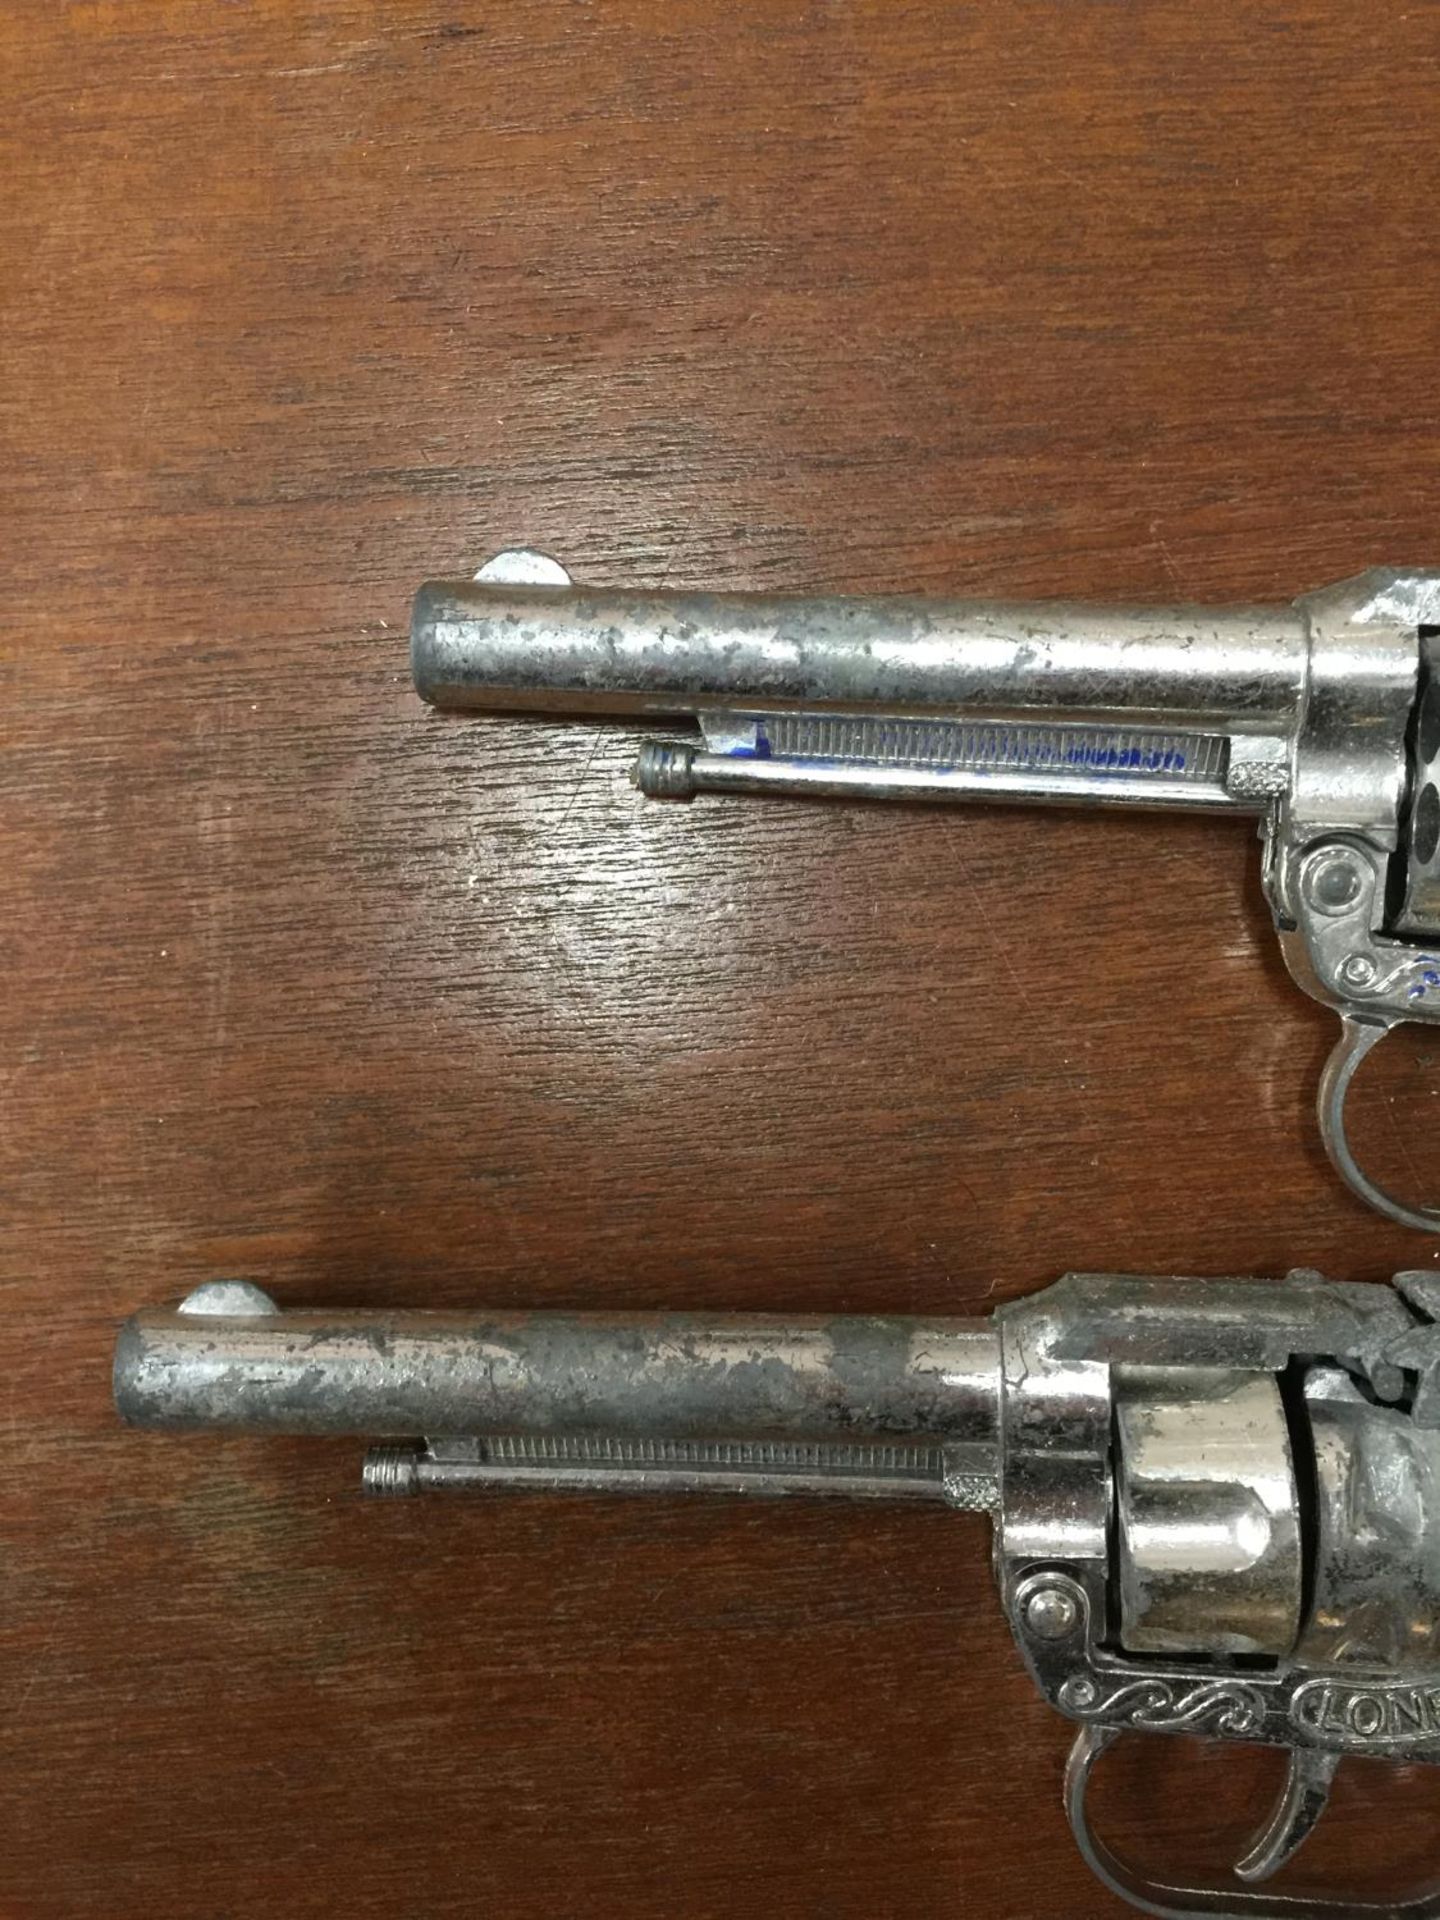 TWO VINTAGE LONESTAR TOY GUNS - Image 3 of 3